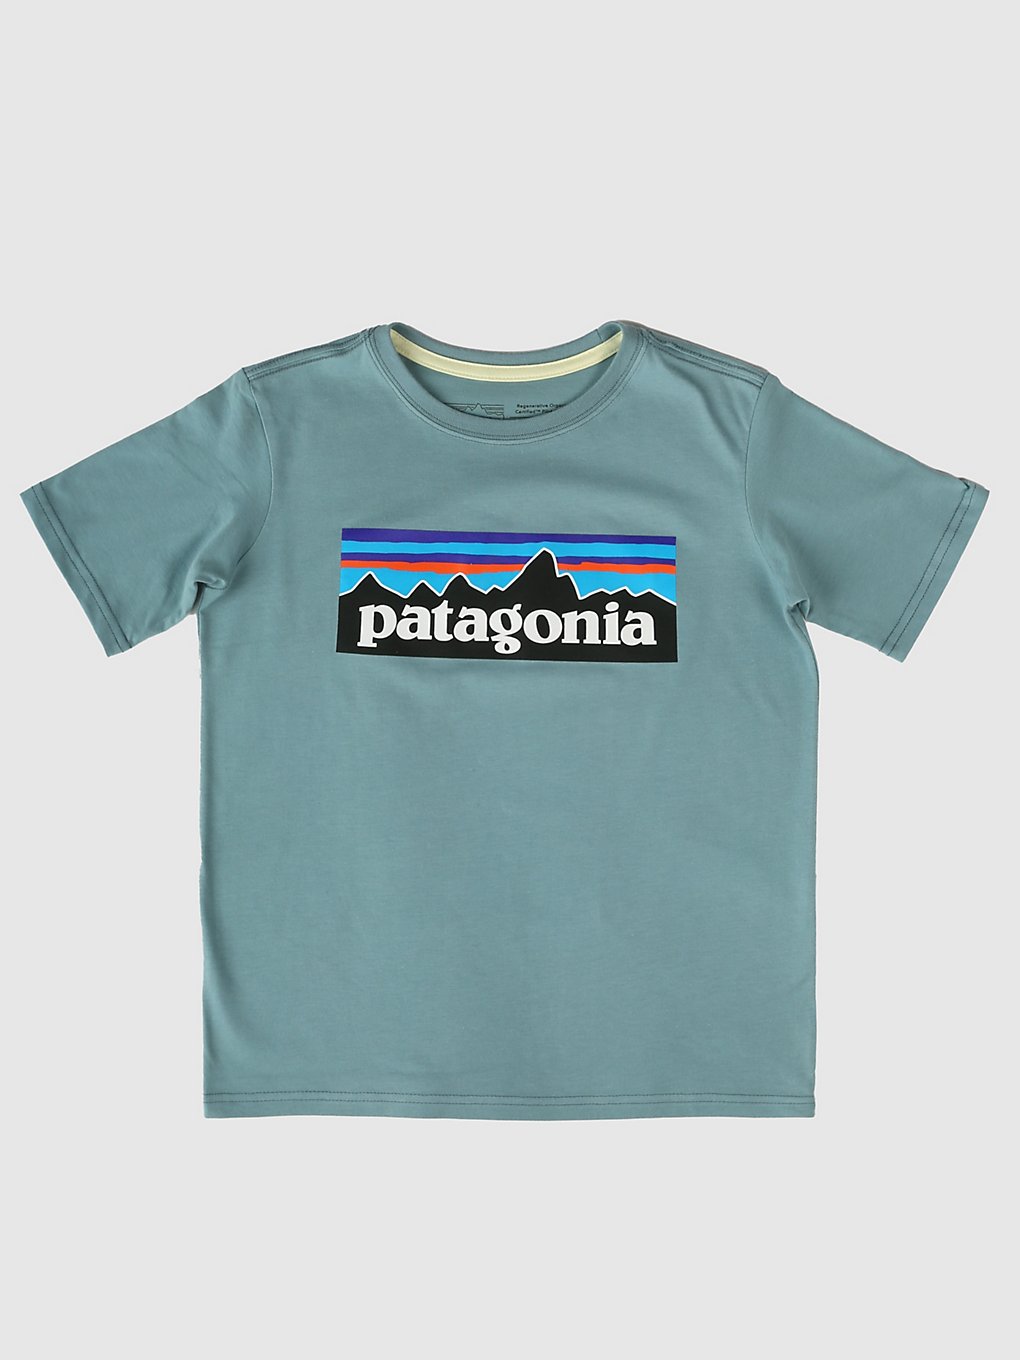 Patagonia Regenerative Organic Certified Cotton P- T-Shirt upwell blue kaufen